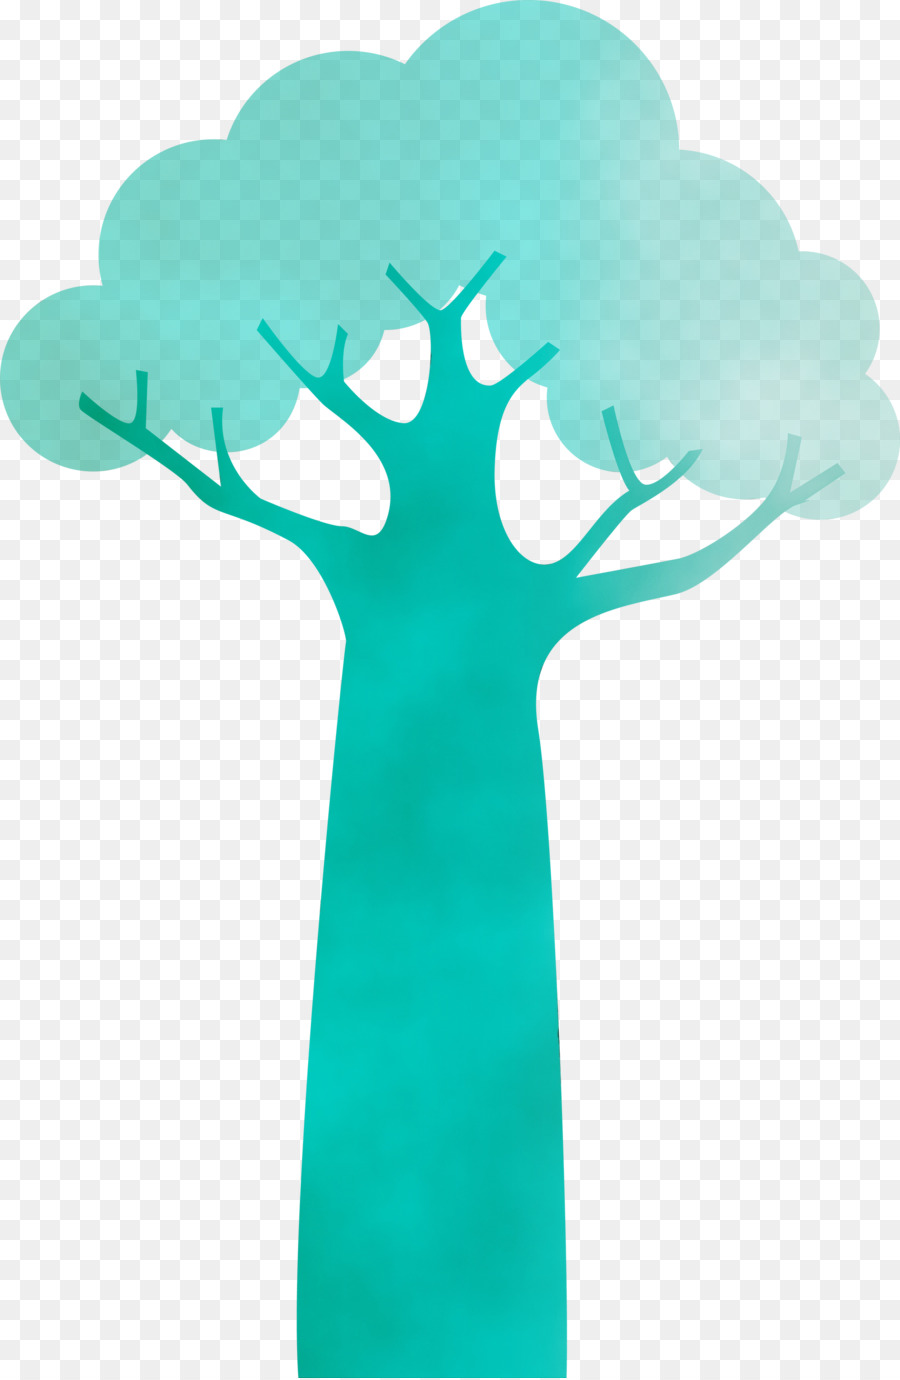 font m-tree tree